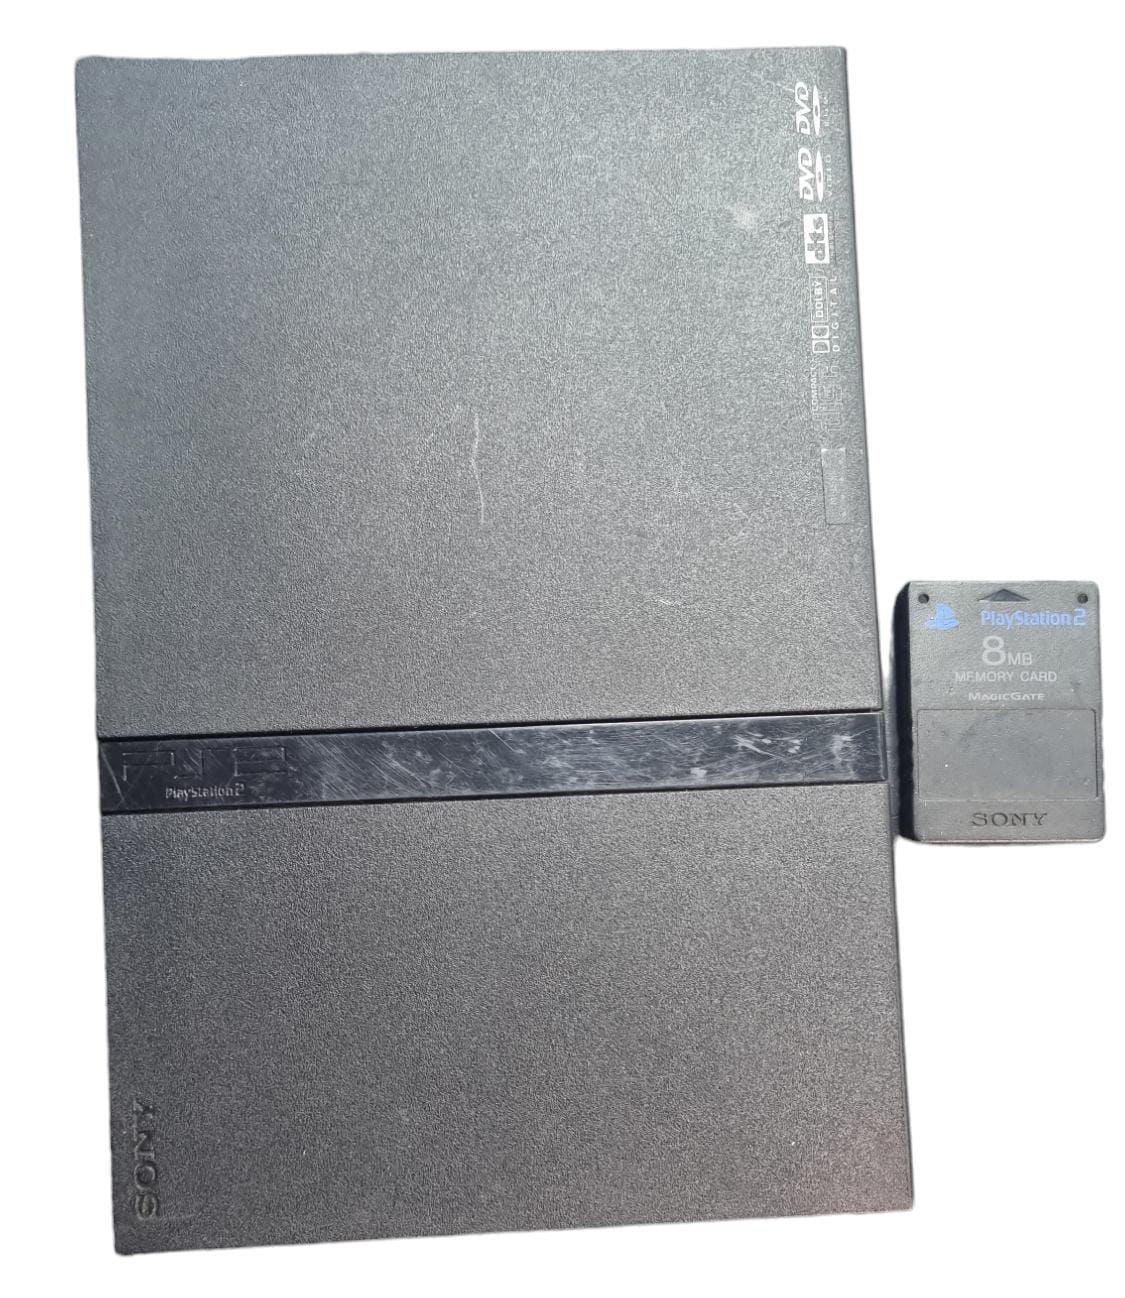 Playstation 2 Slim Ed - SCPH-70003 - Black - No Pad or Box